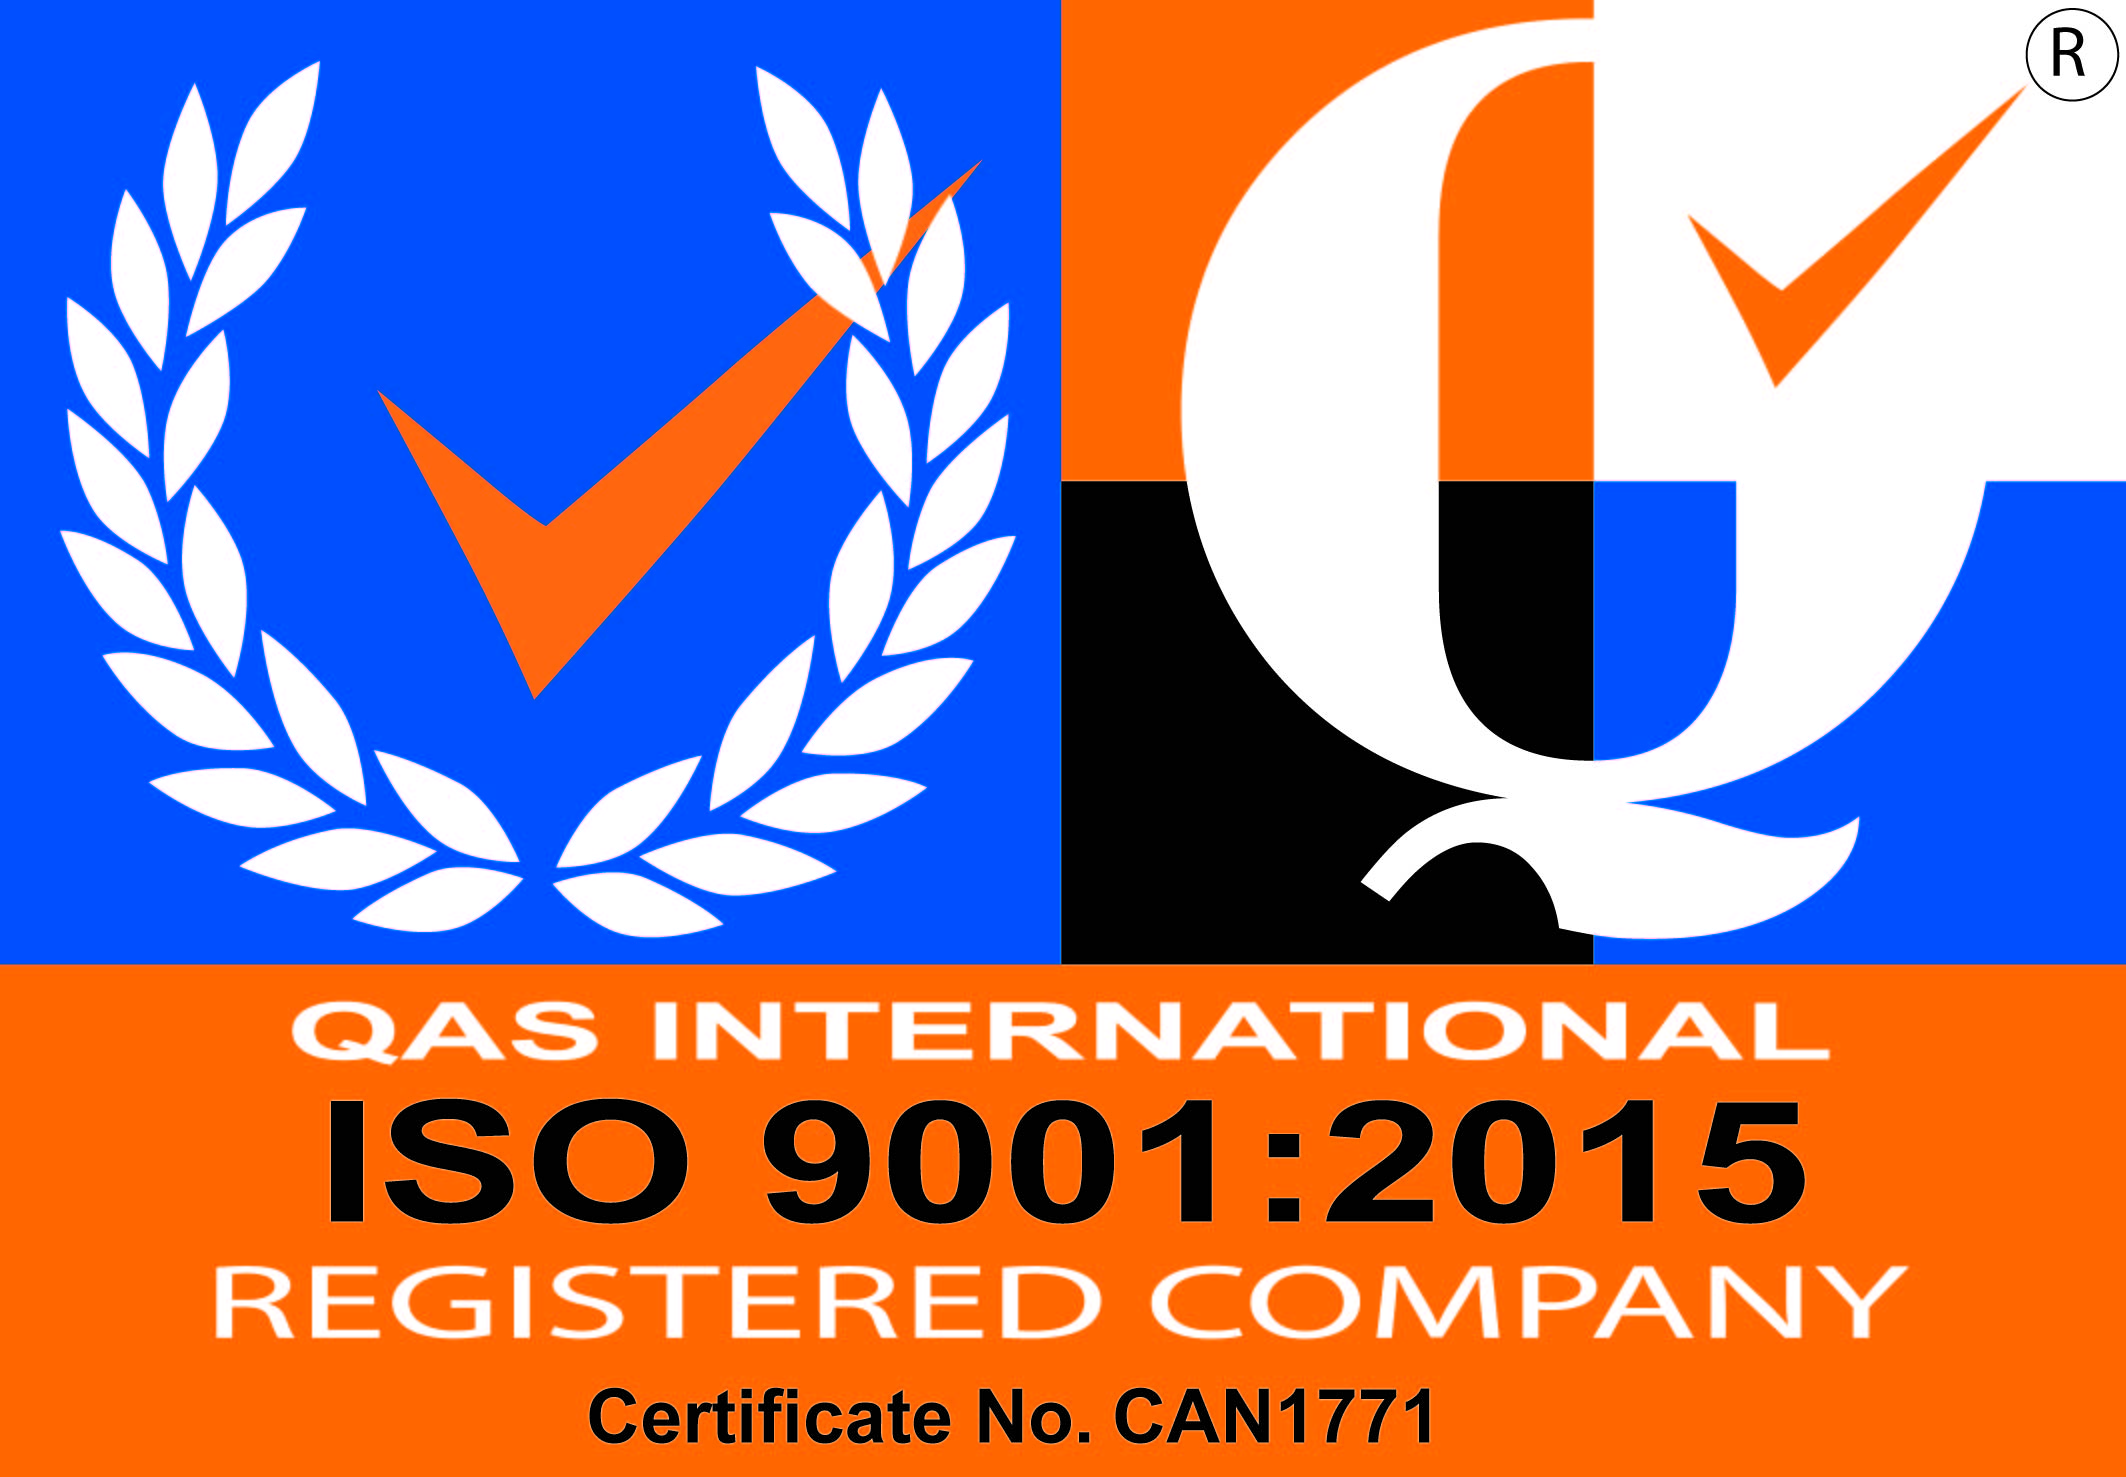 ISO 9001 2015 LOGO 